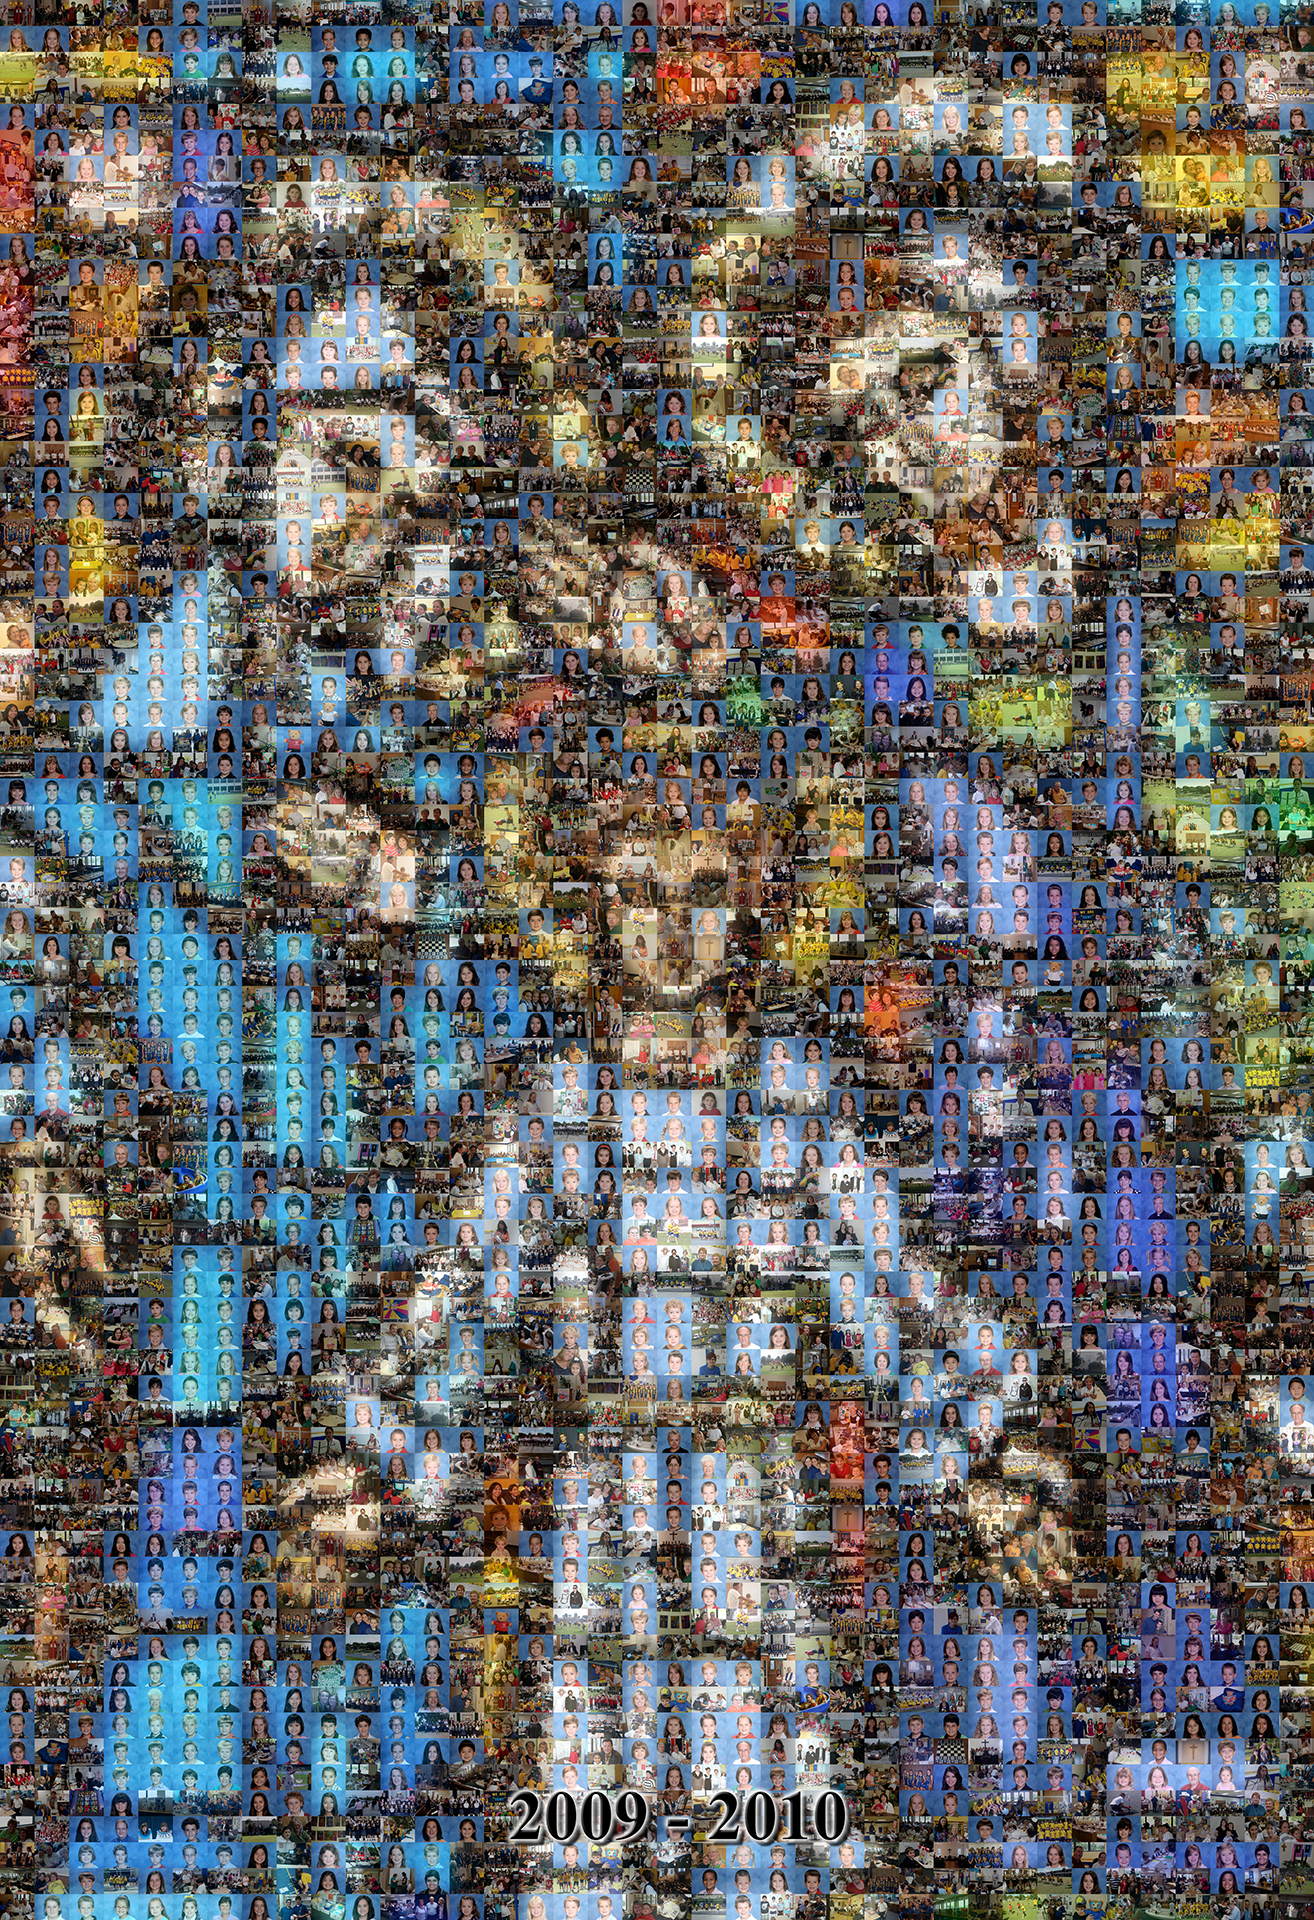 photo mosaic created using 969 school photos